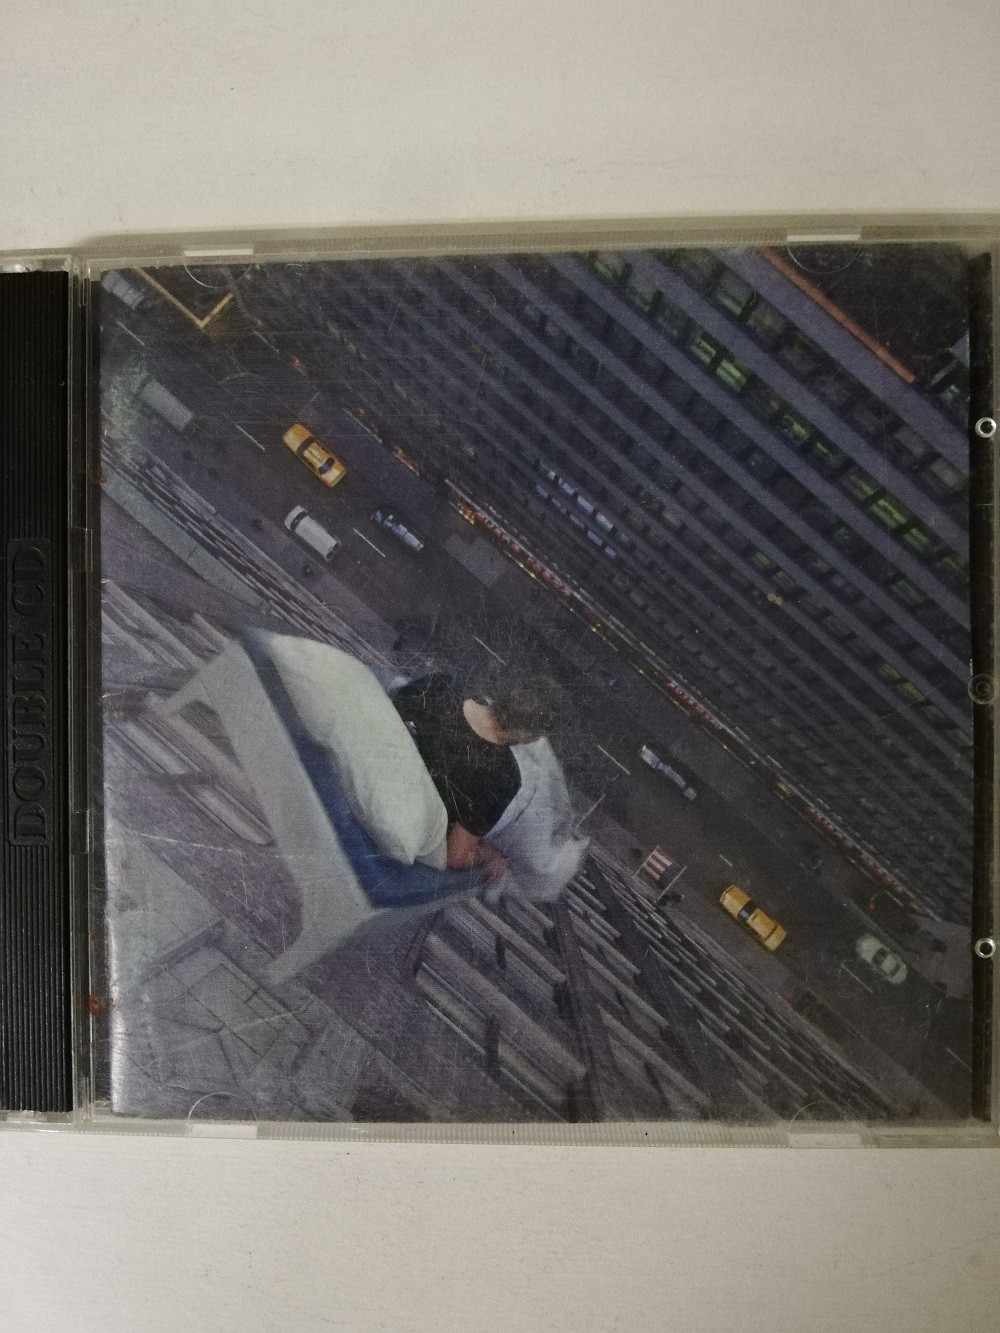 Imagen CD X 2 MEGADETH - RUDE AWAKENING